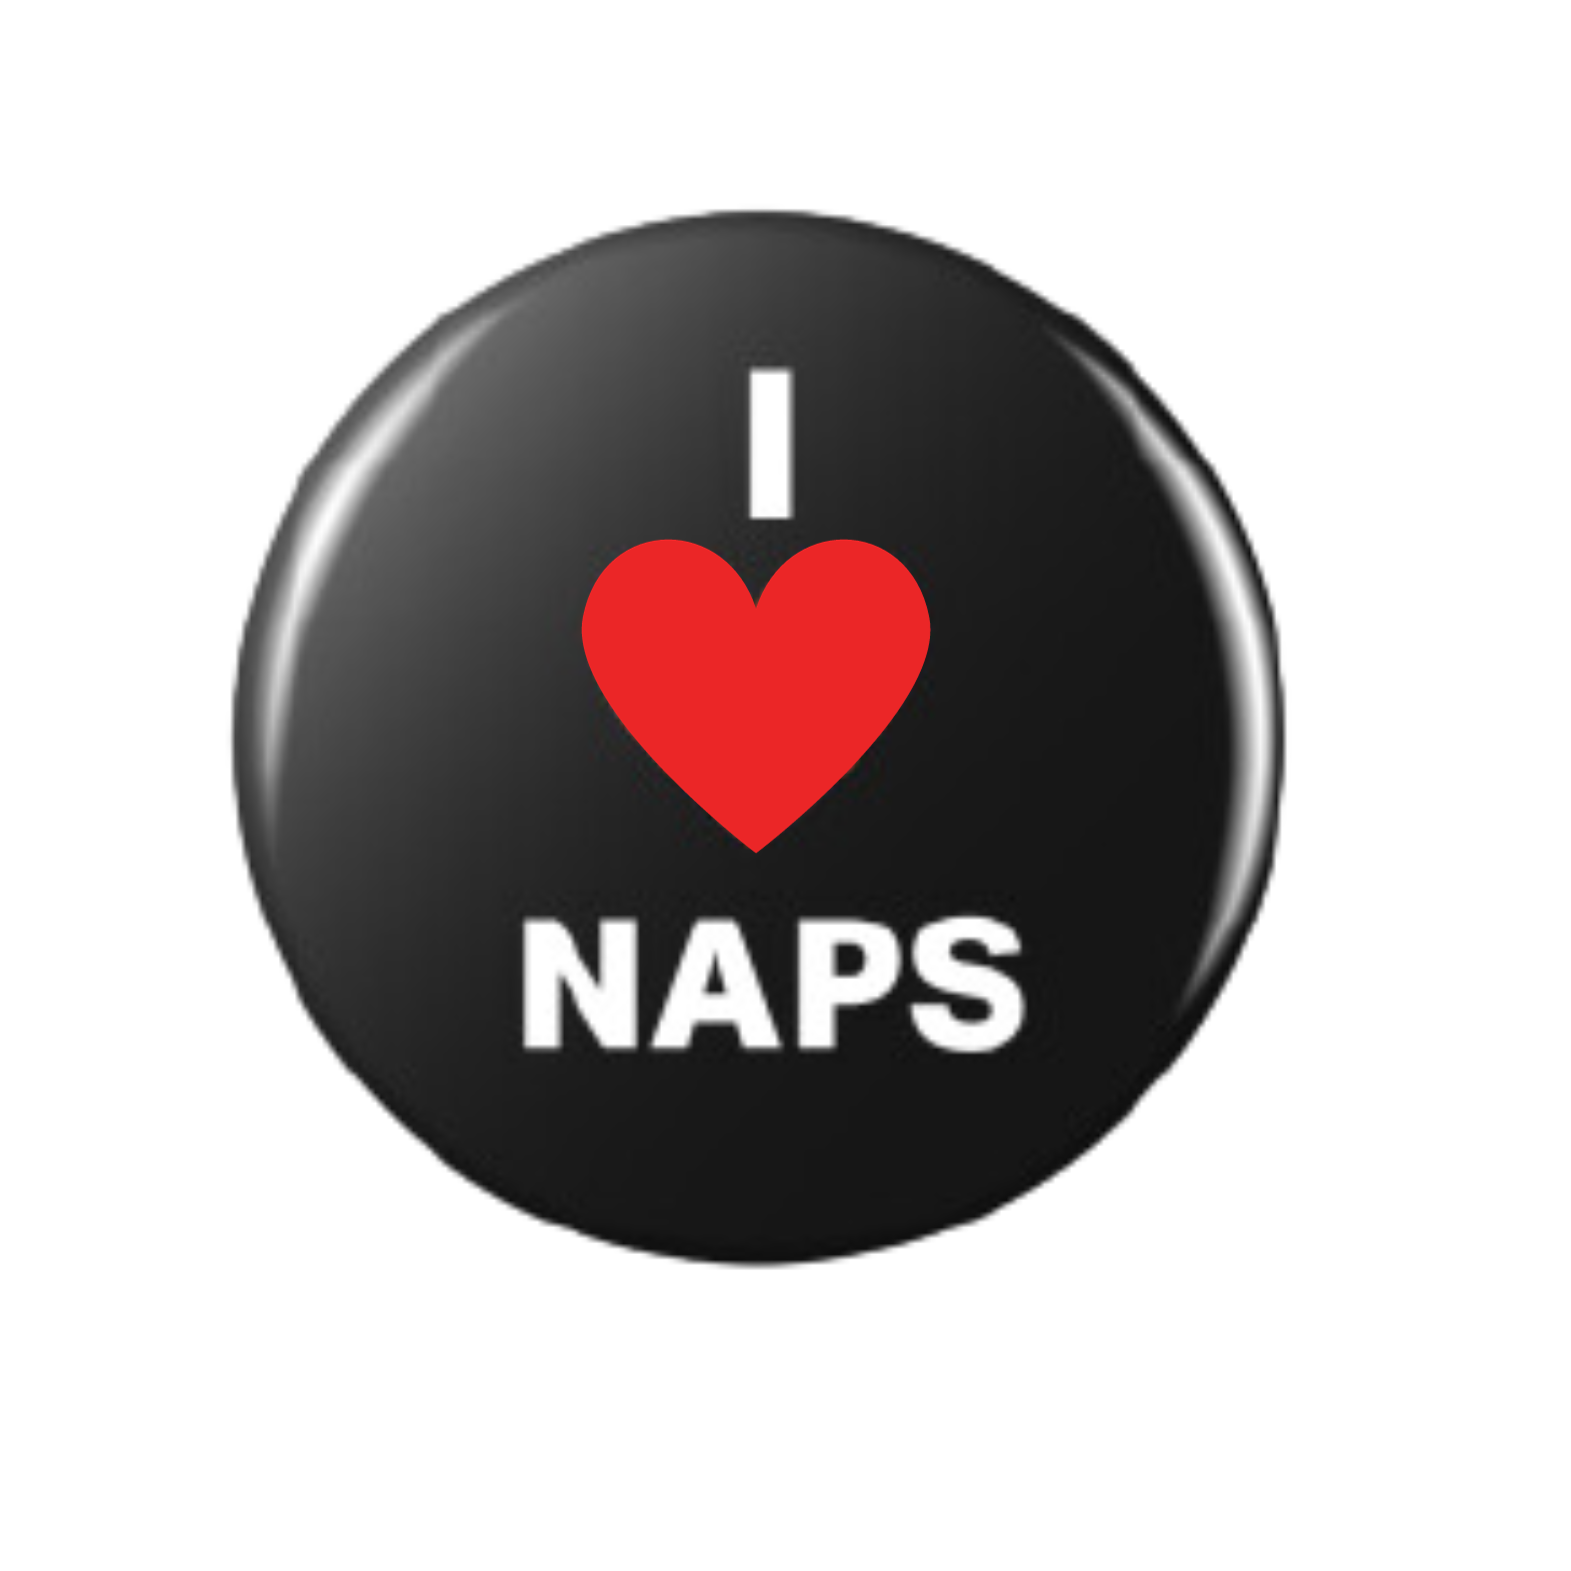 Nap tech logo hi-res stock photography and images - Alamy